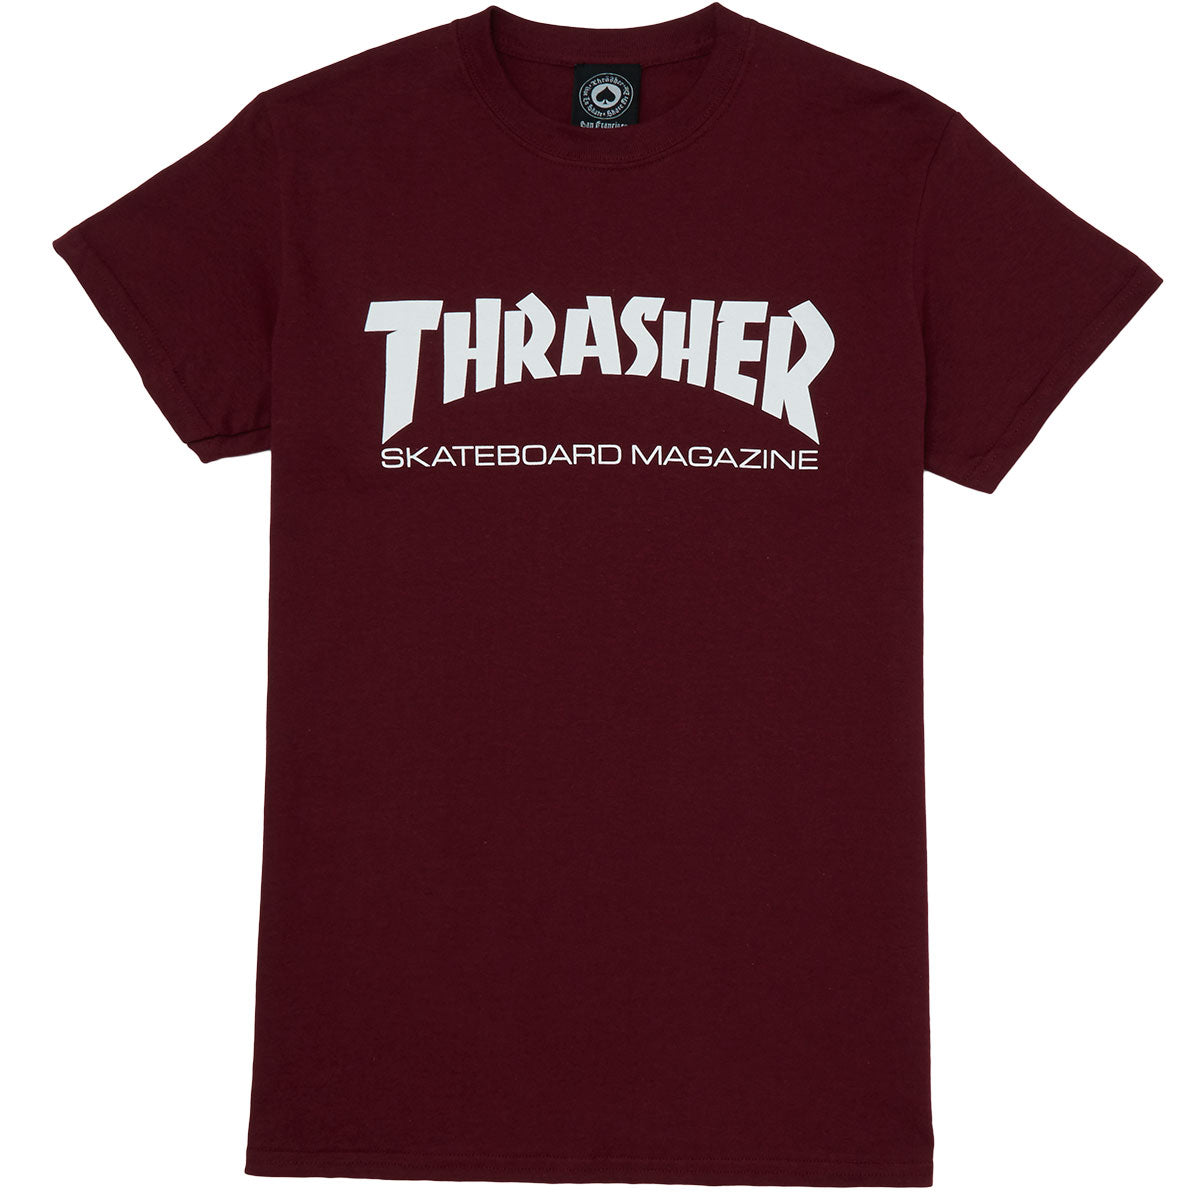 Thrasher Skate Mag T-Shirt - Maroon image 1